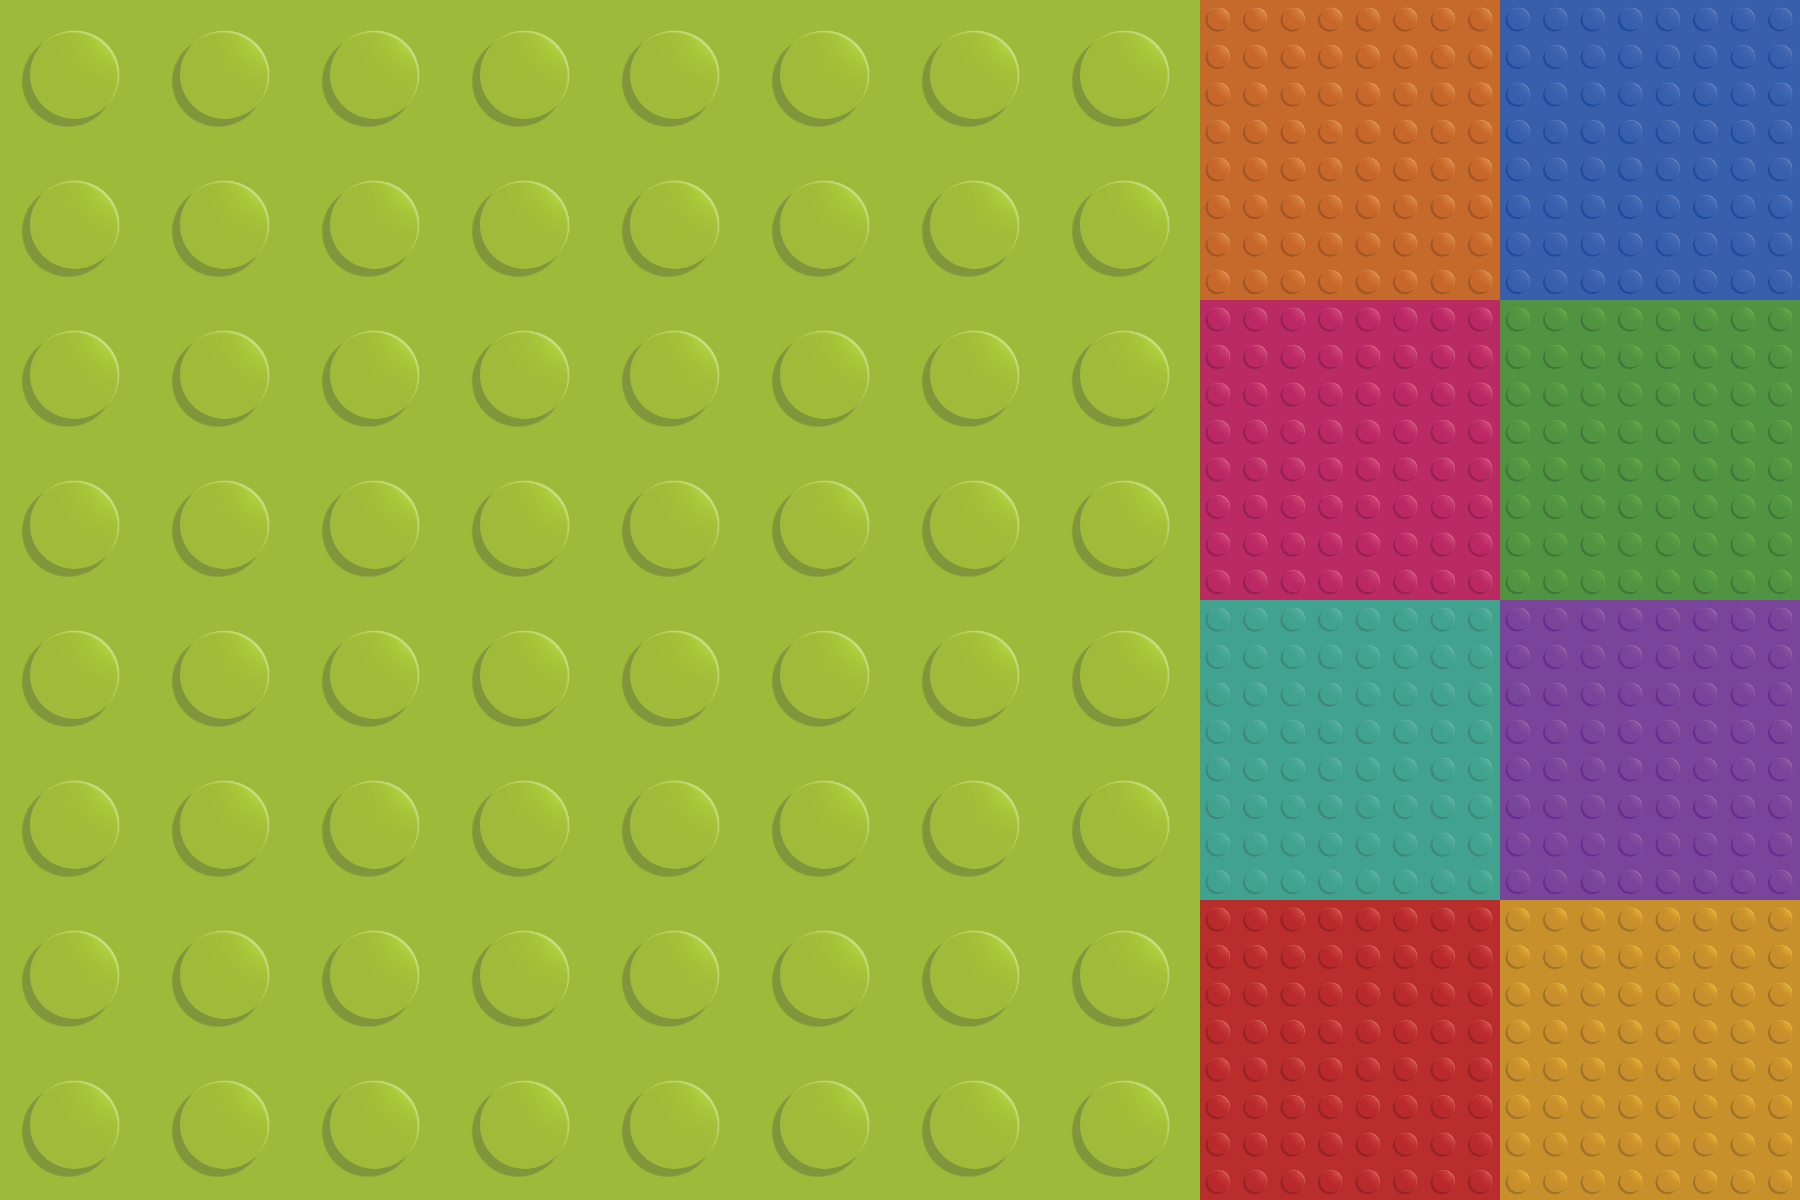 LEGO Patterns